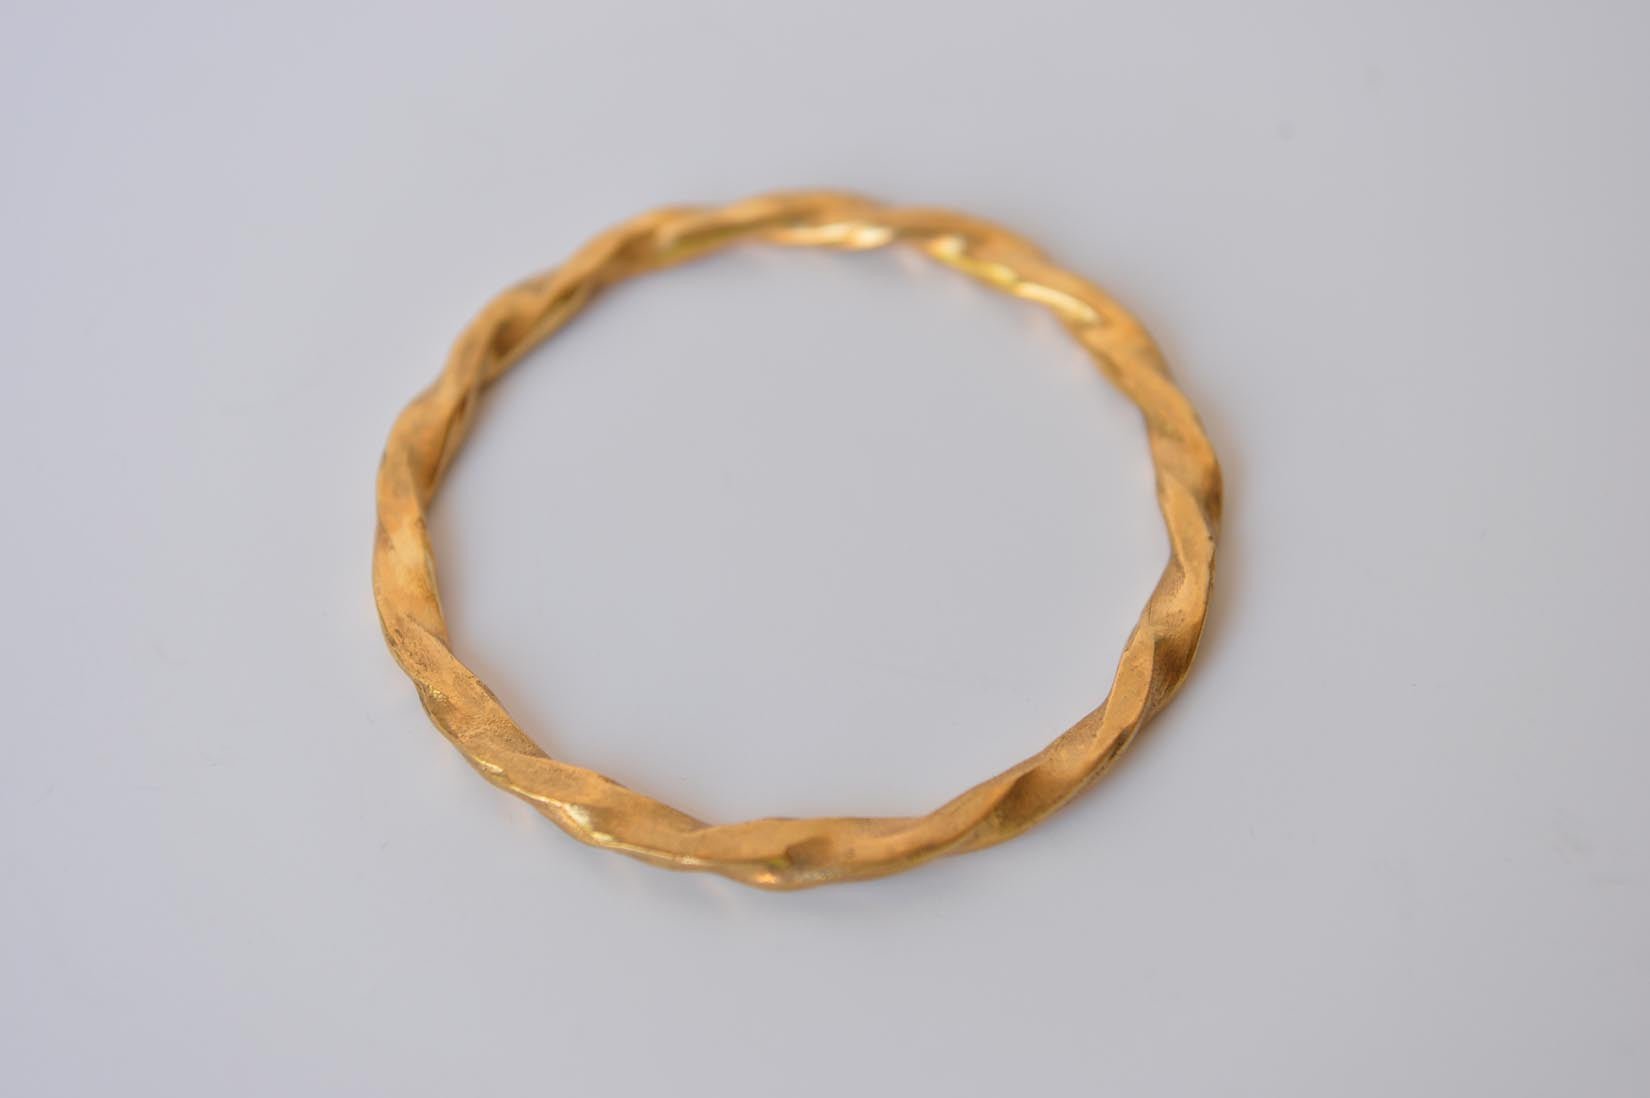 Circular bangle bracelet "Torsade" by Elisabeth Riveiro - Natalia Willmott